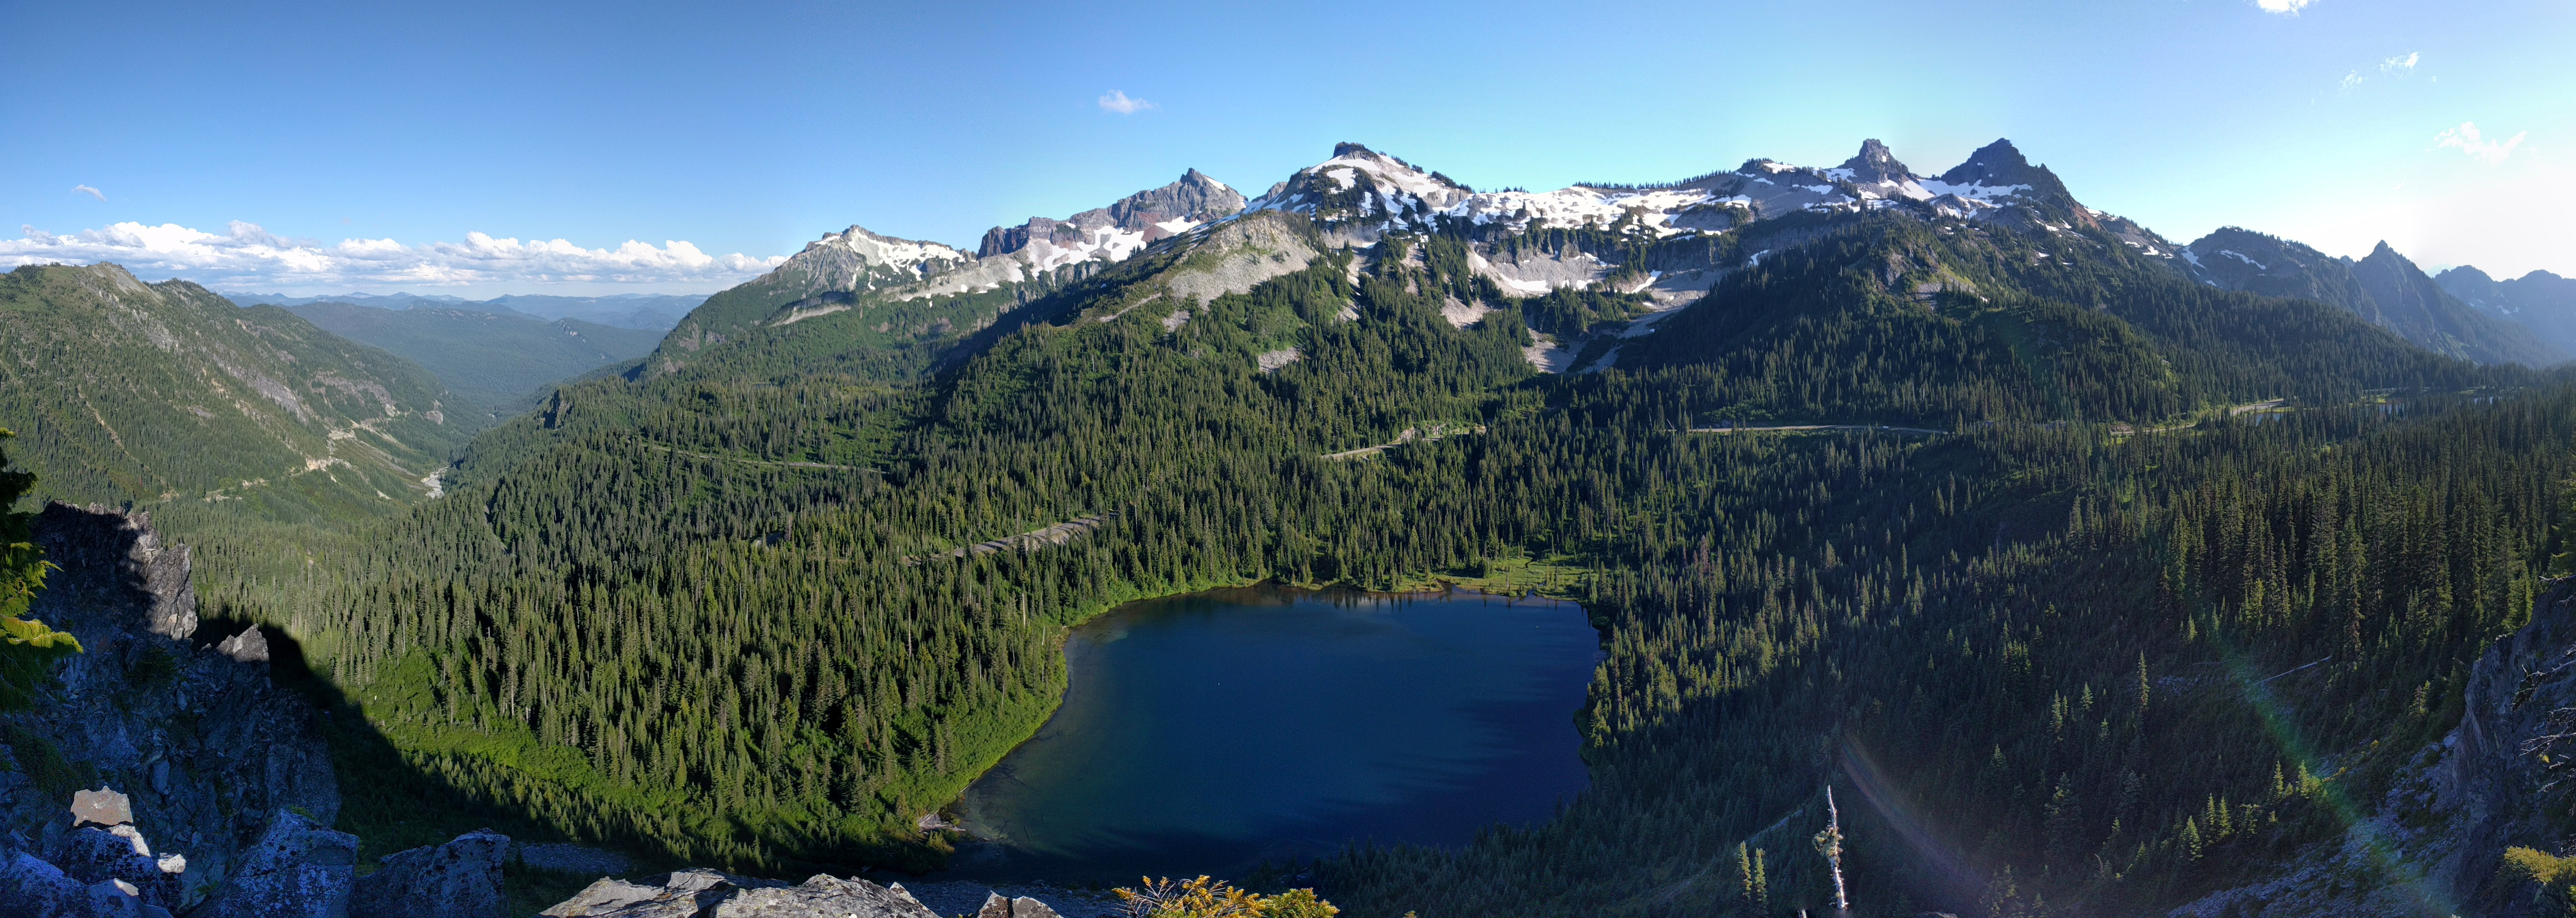 Louise Lake below Pinnacle Peak